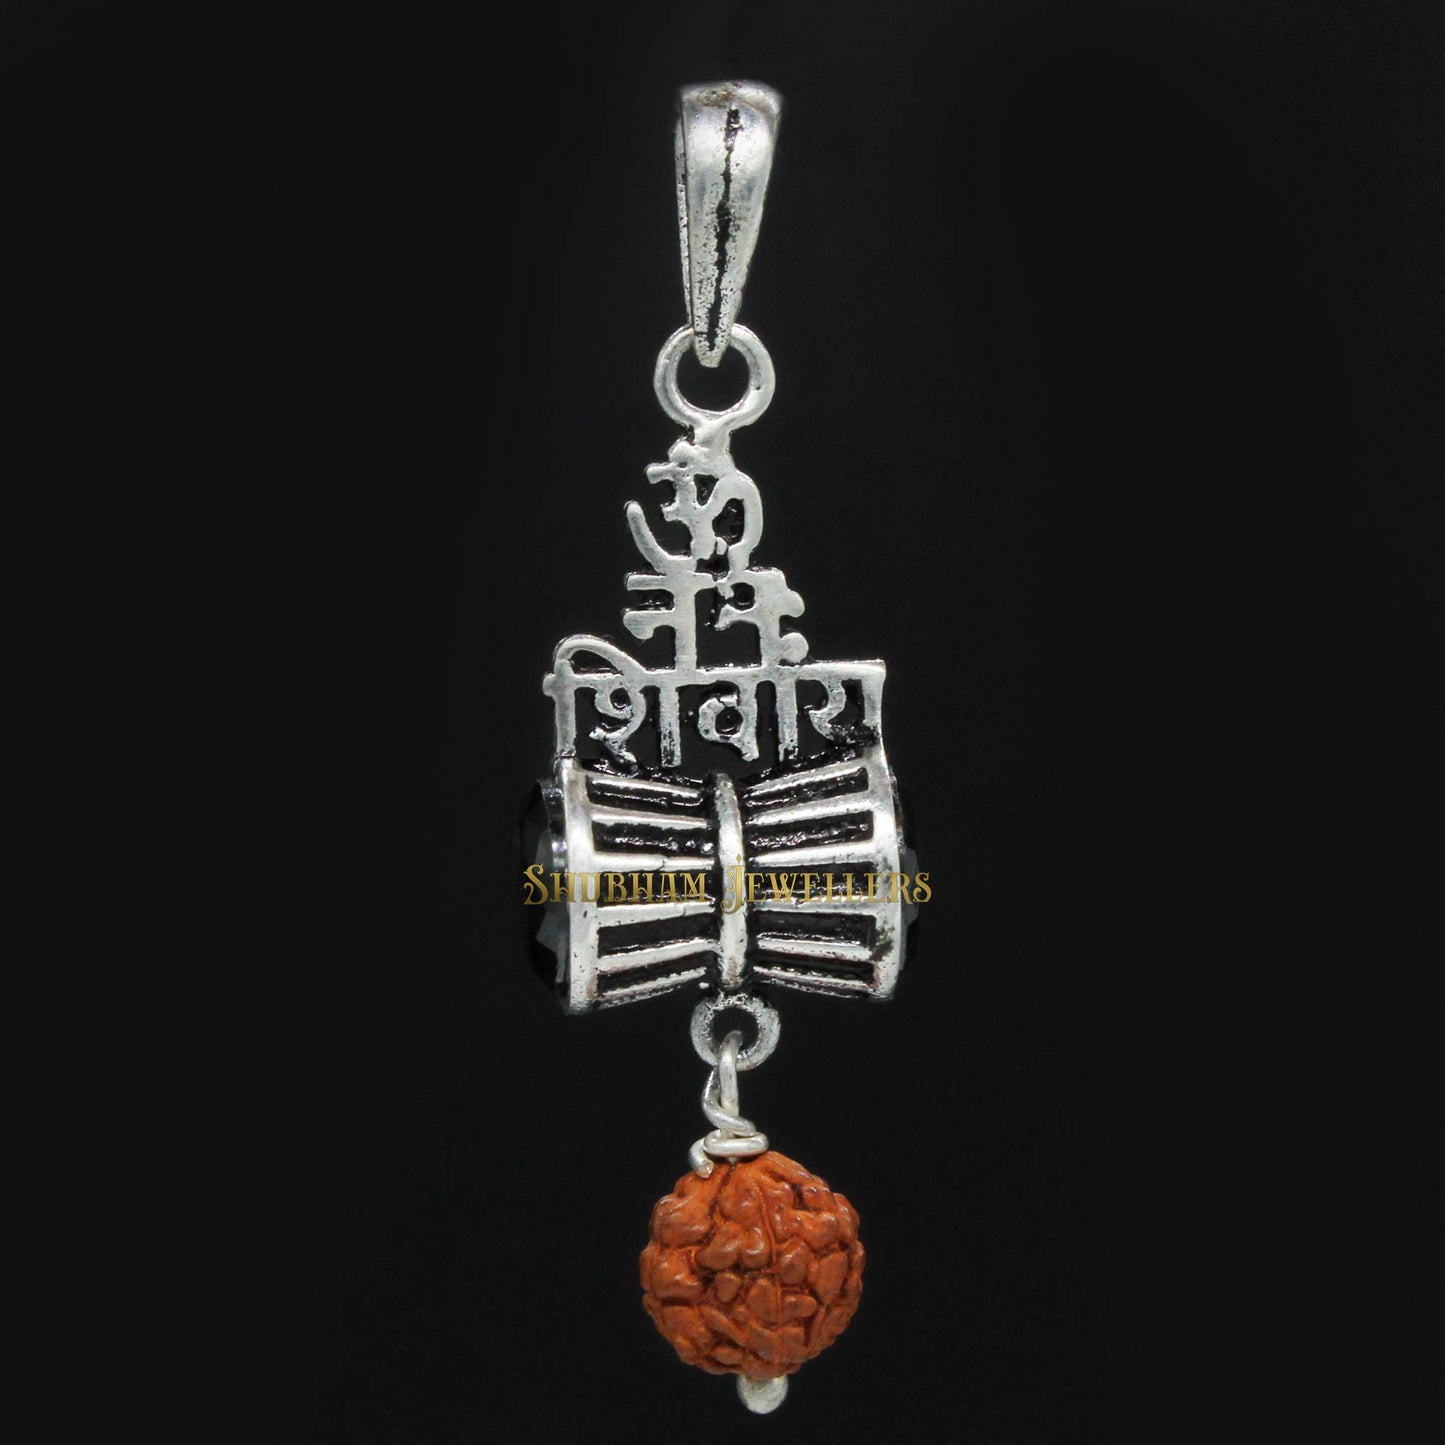 Shubham Jewellers Rehti 925-92.5 Pure Sterling Silver OM Namah Shivay Oxidised Pendant For Men,Women,Children,Boys and Girls